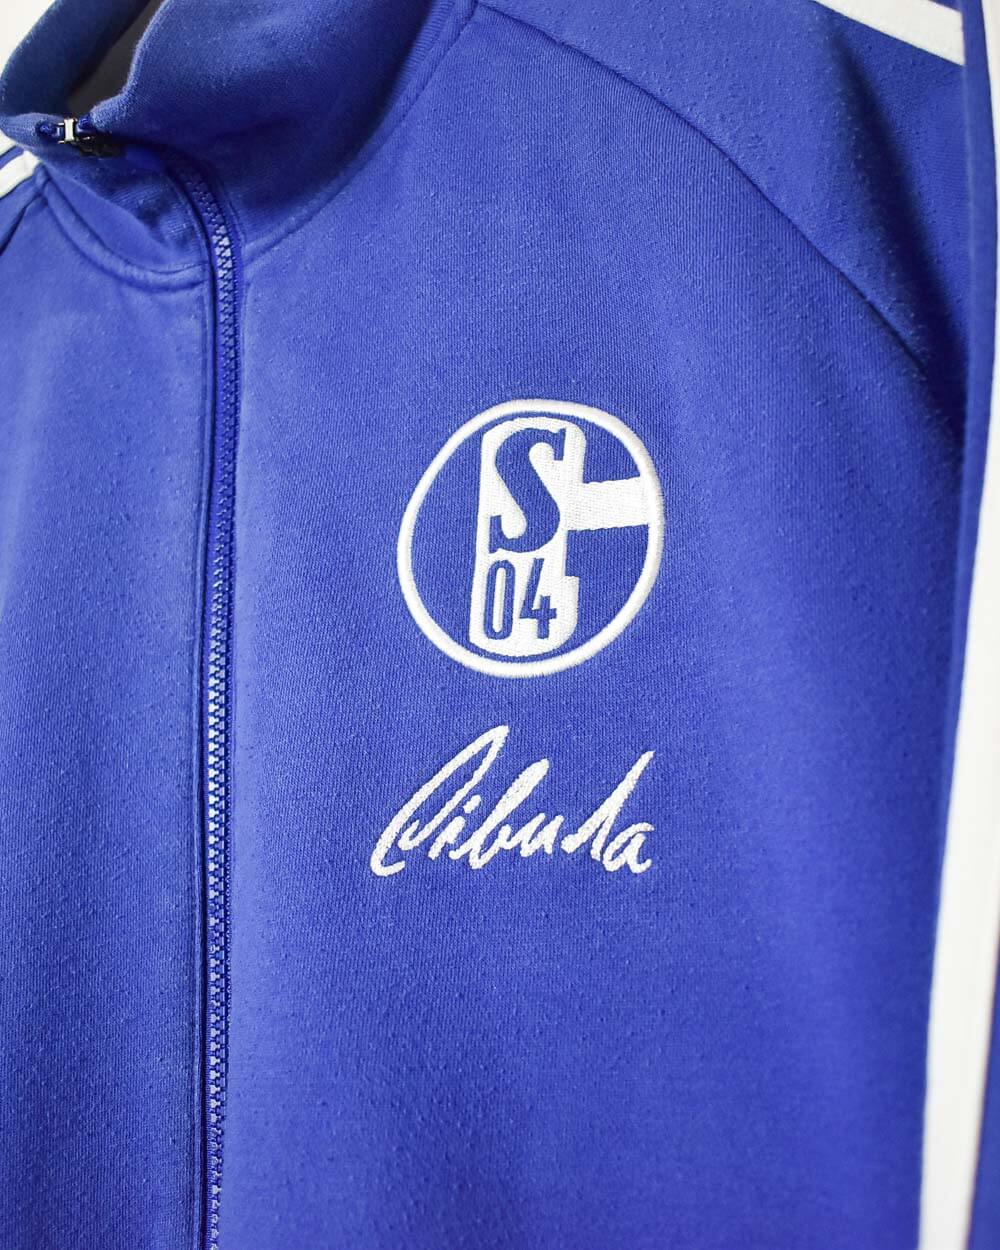 Blue Adidas  FC Schalke 04 Zip-Through Sweatshirt - Small